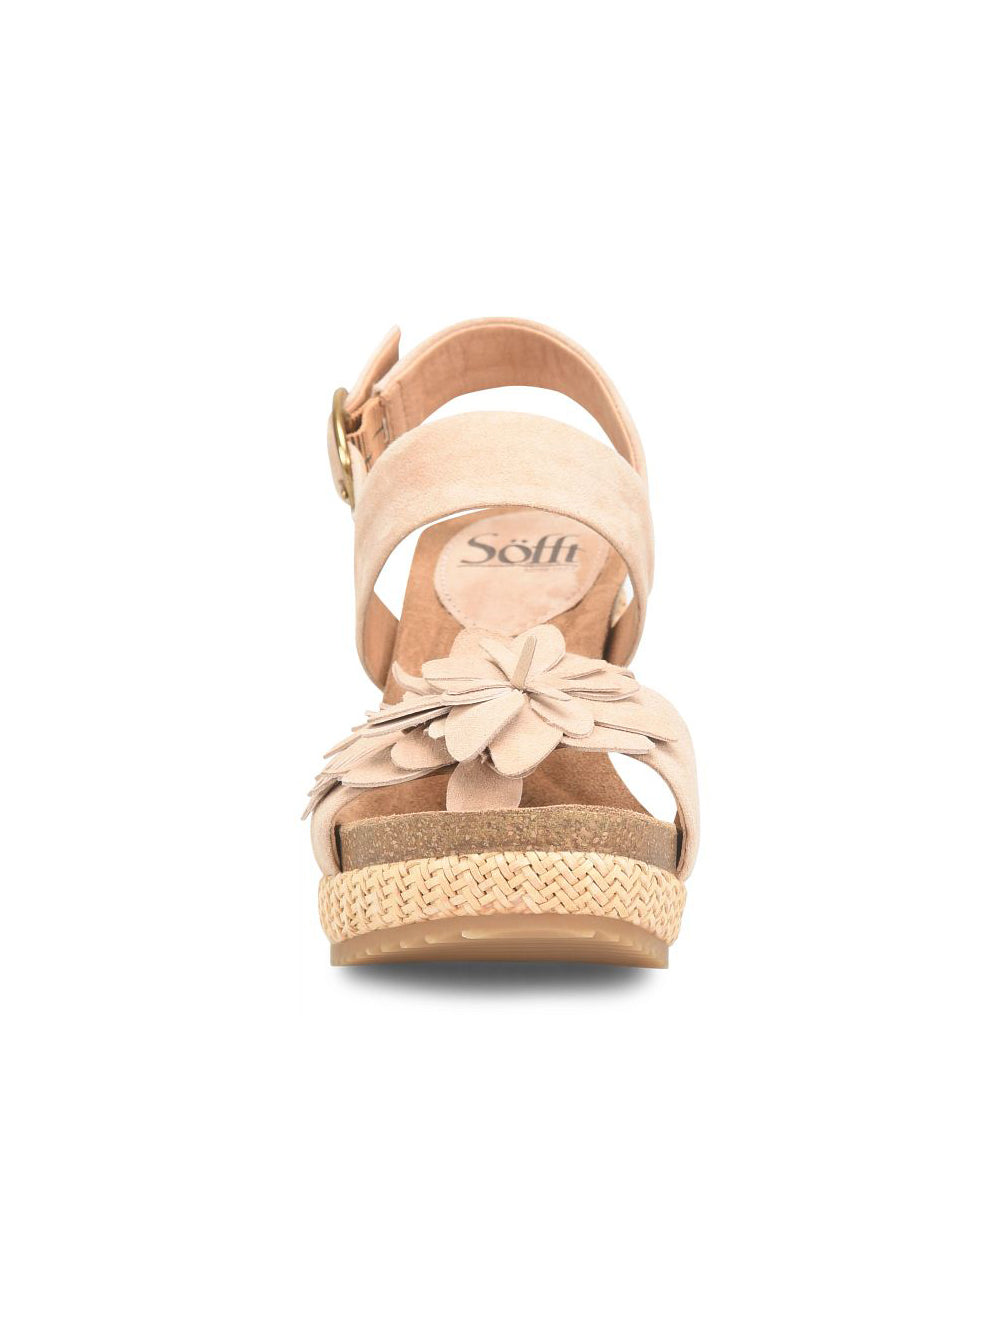 sofft shoes cali flower platform wedge sandals in rose taupe